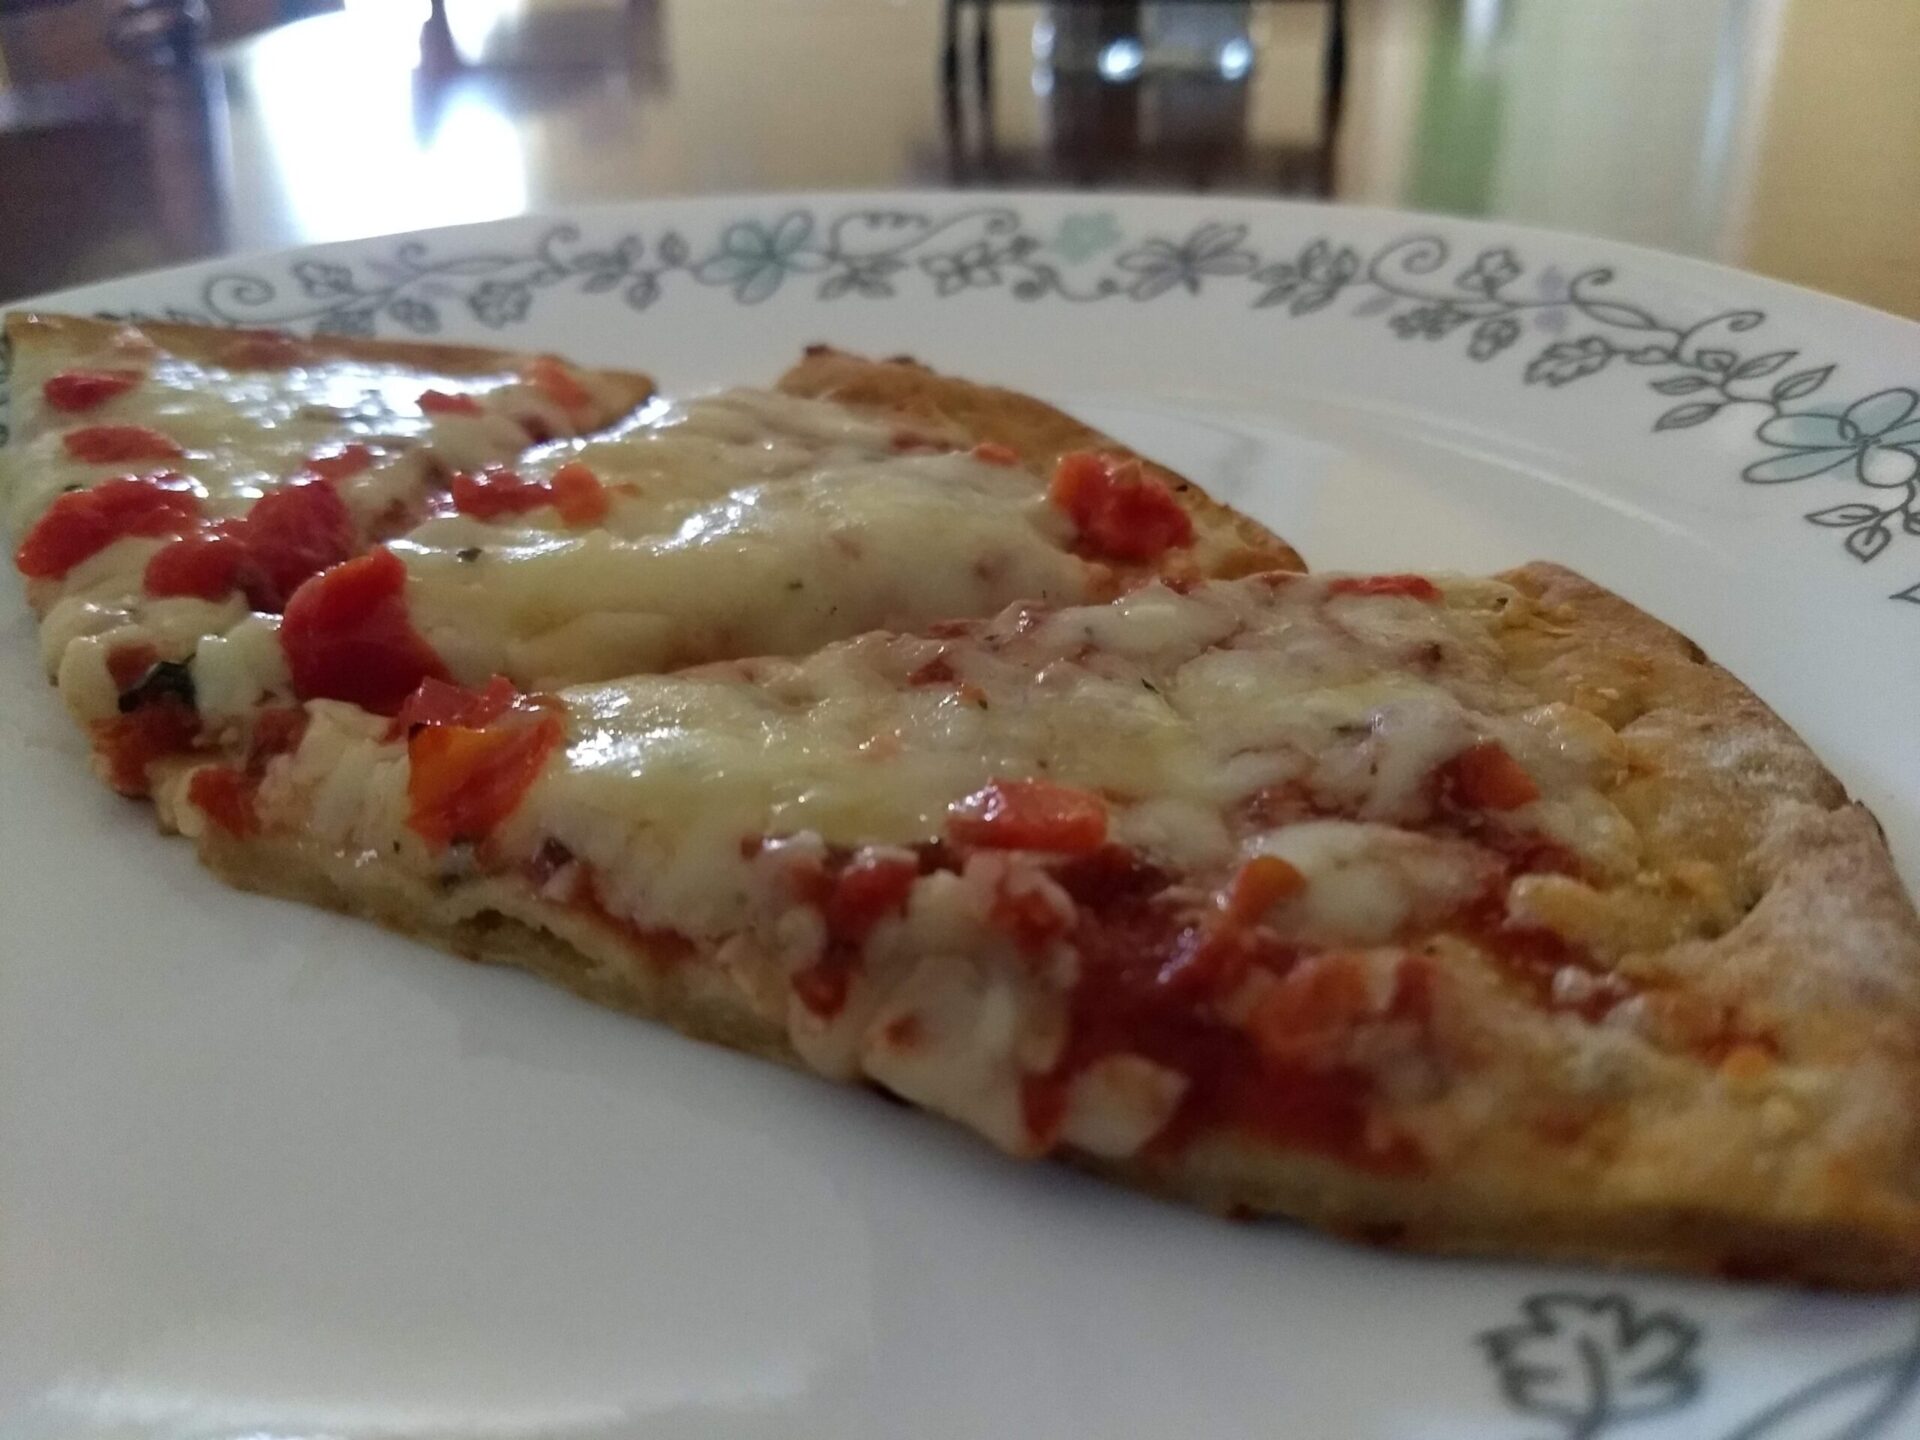 Mama Cozzi's Cauliflower Crust Pizza | ALDI REVIEWER